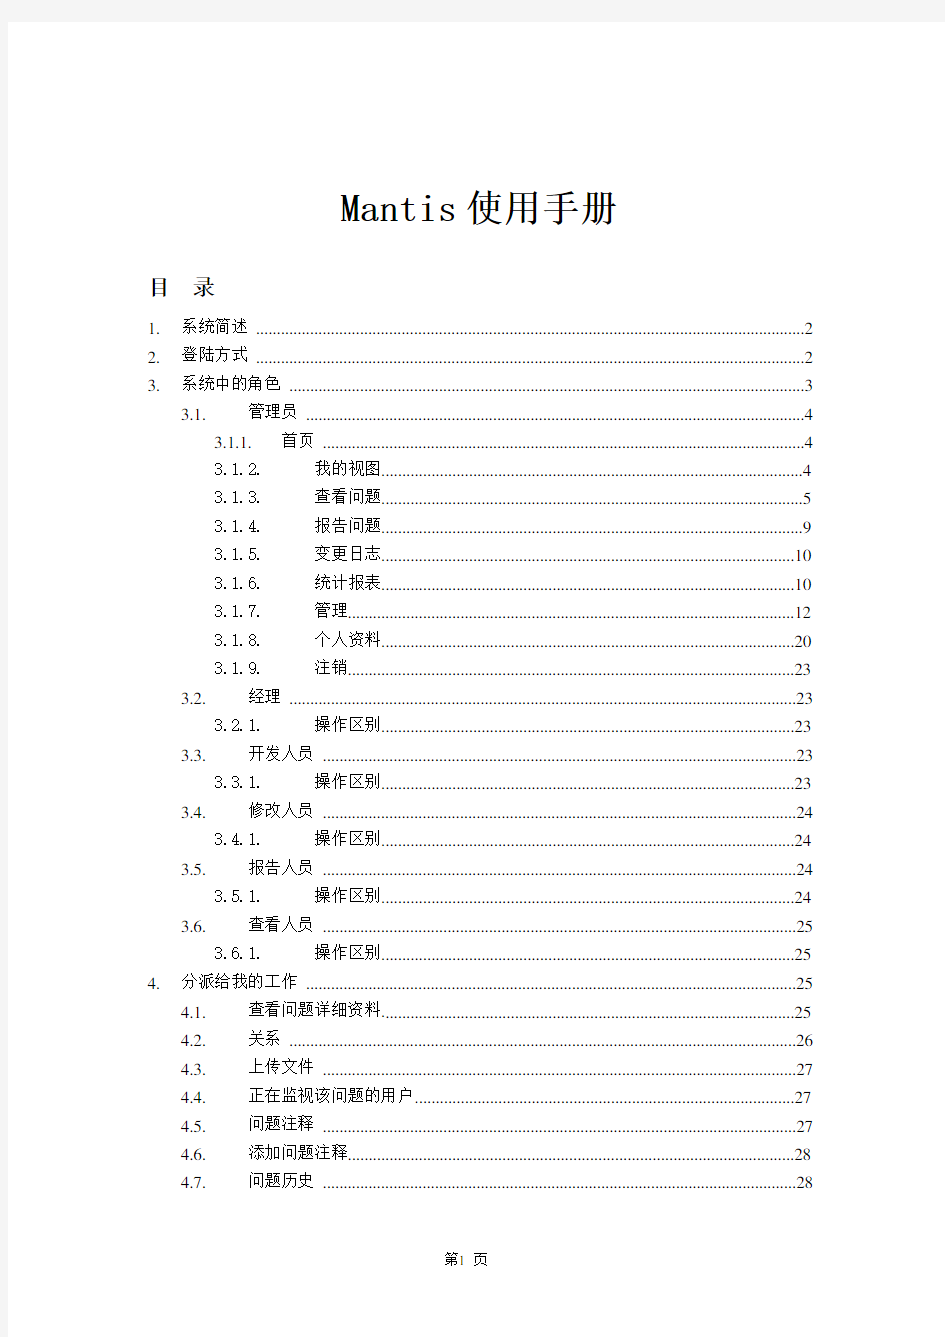 Mantis-流程操作手册2.0